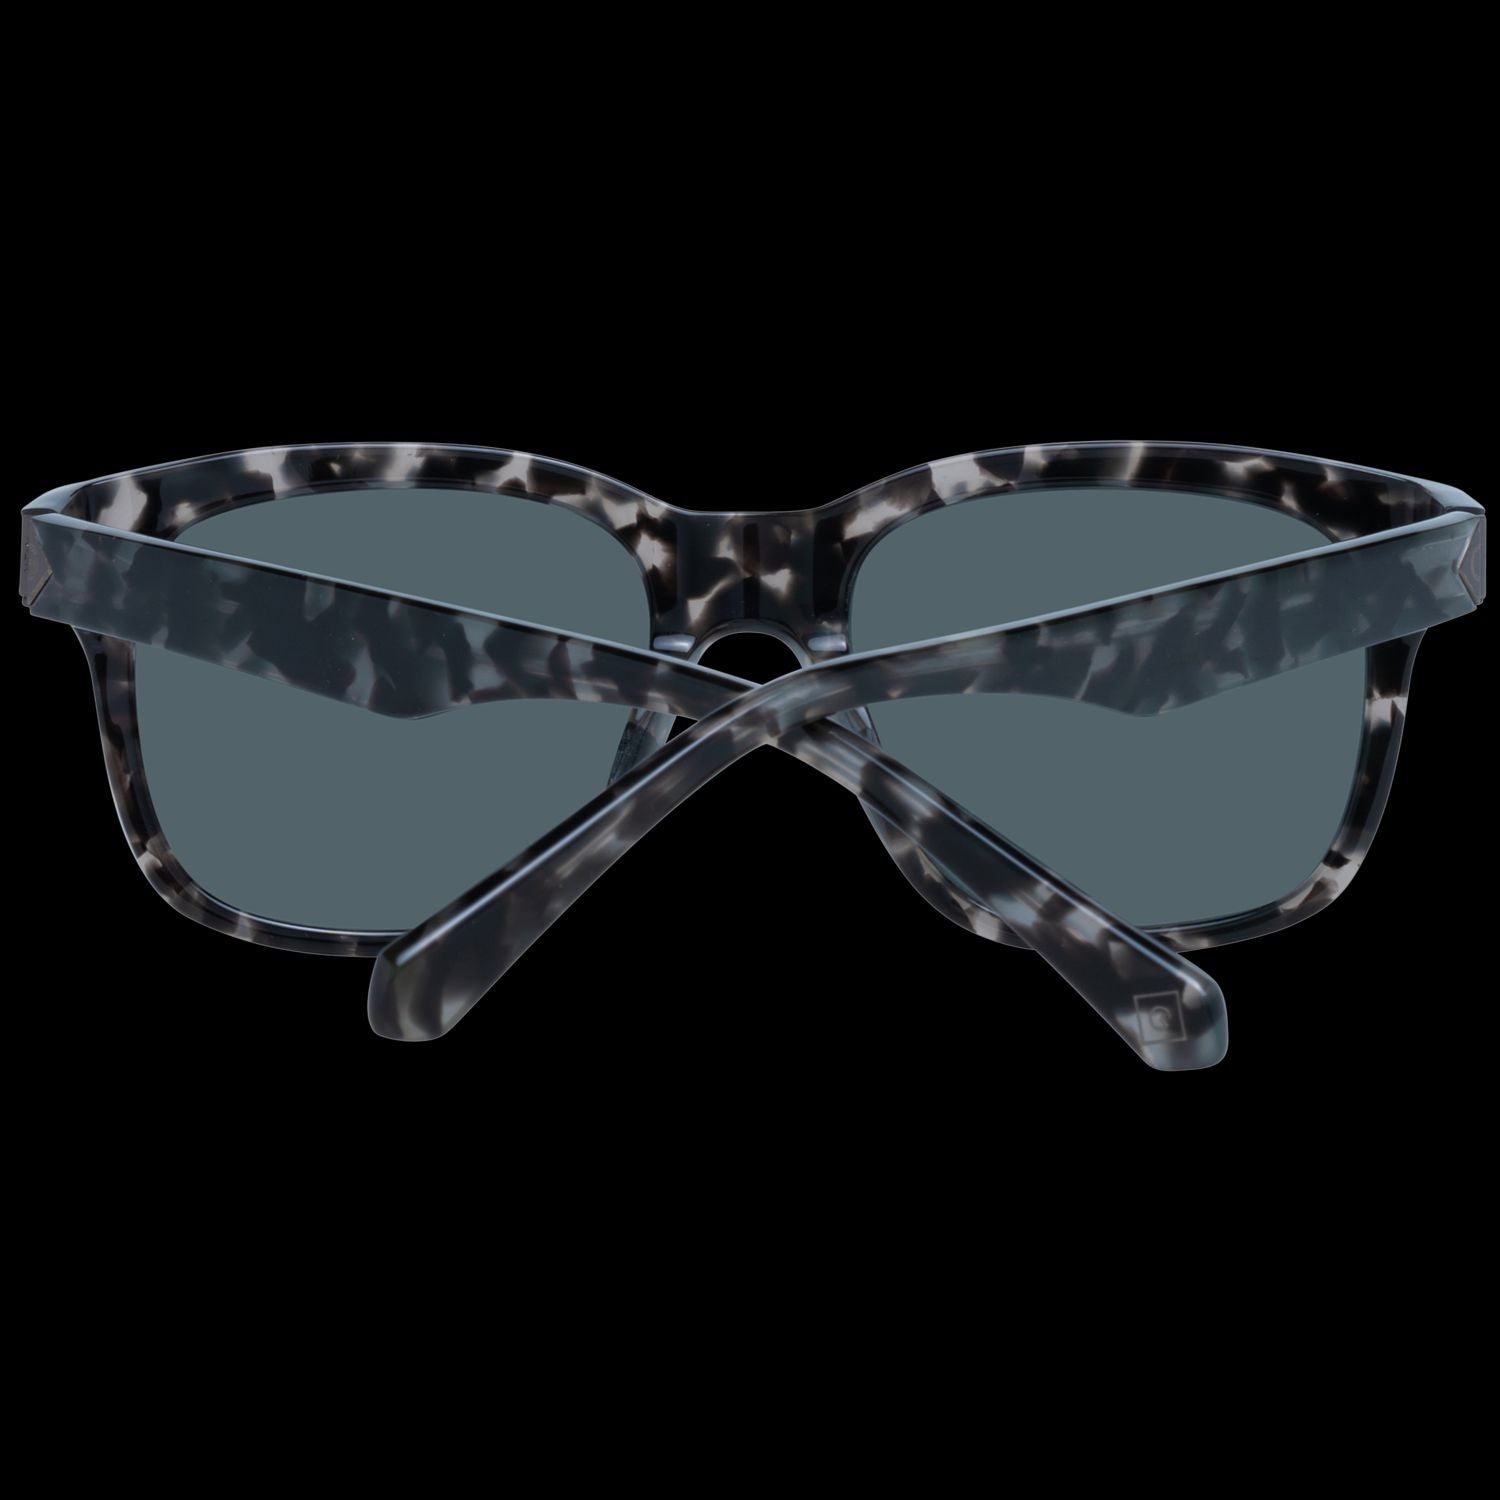 Gant Gray Unisex Sunglasses